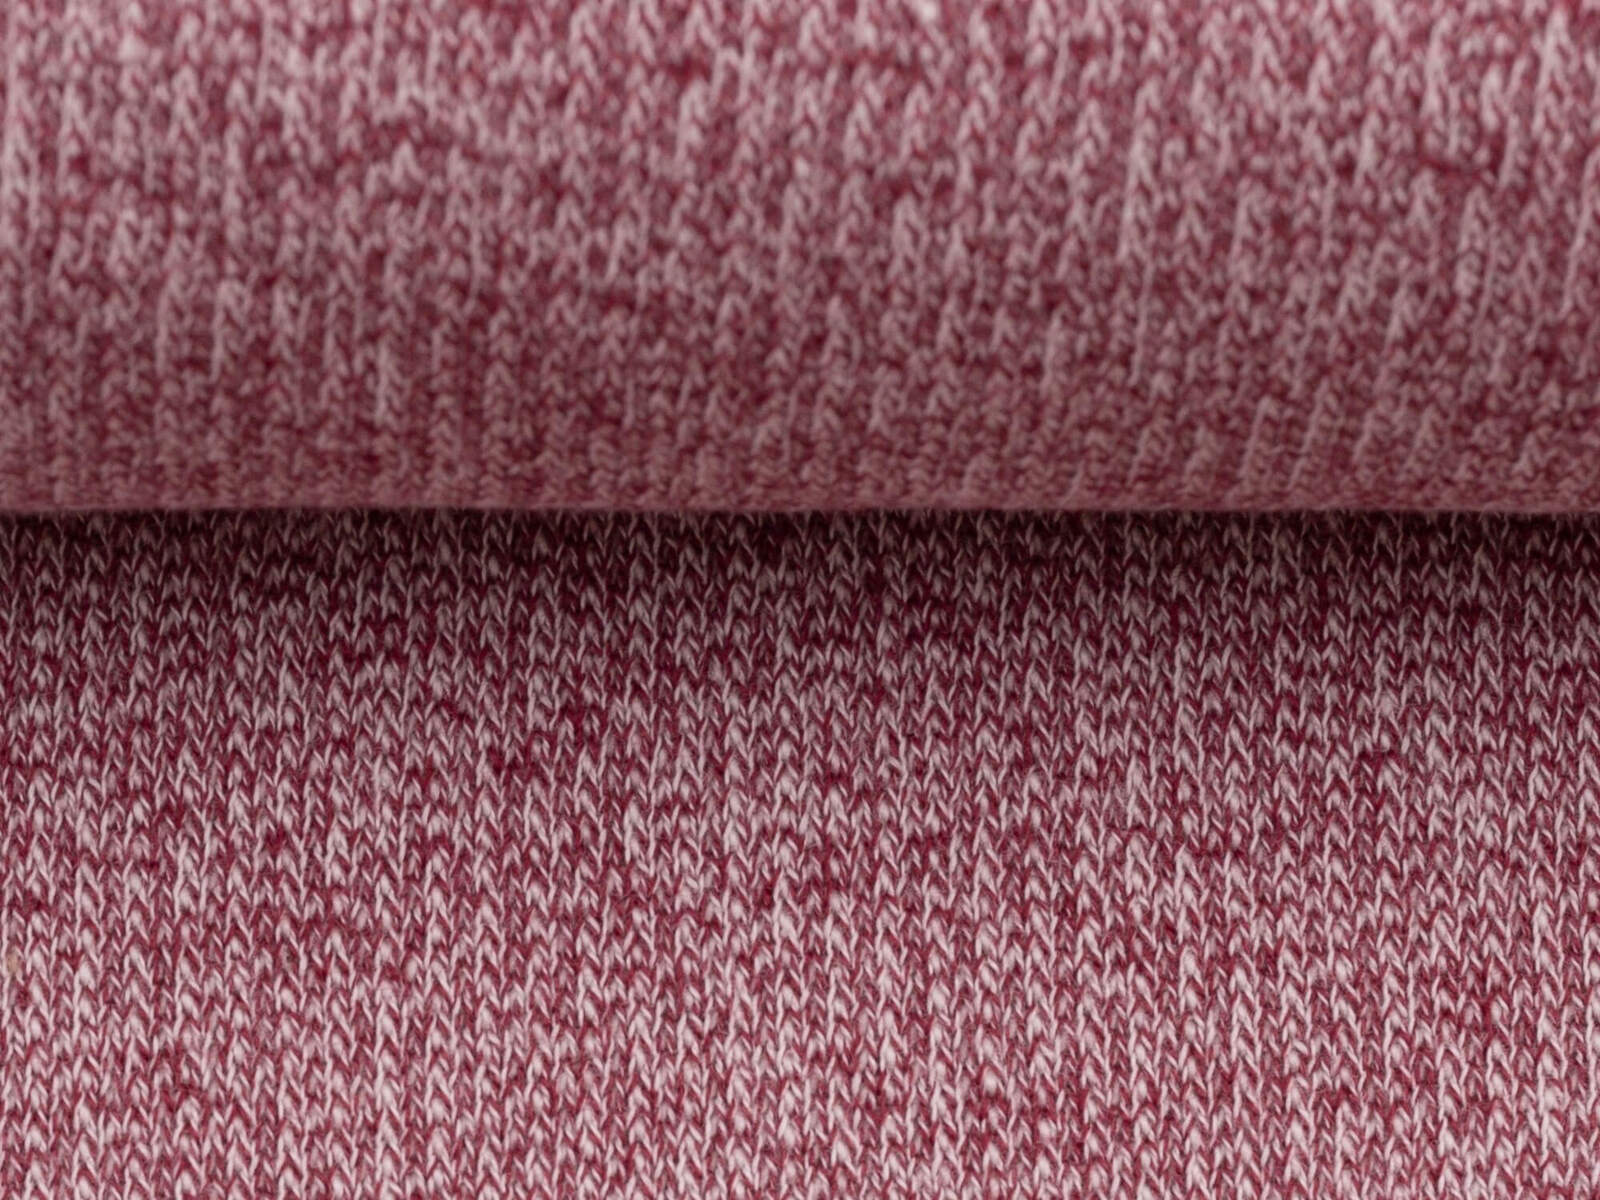 European Knit | 100% Cotton French Terry Lightweight Knit, Melange ...